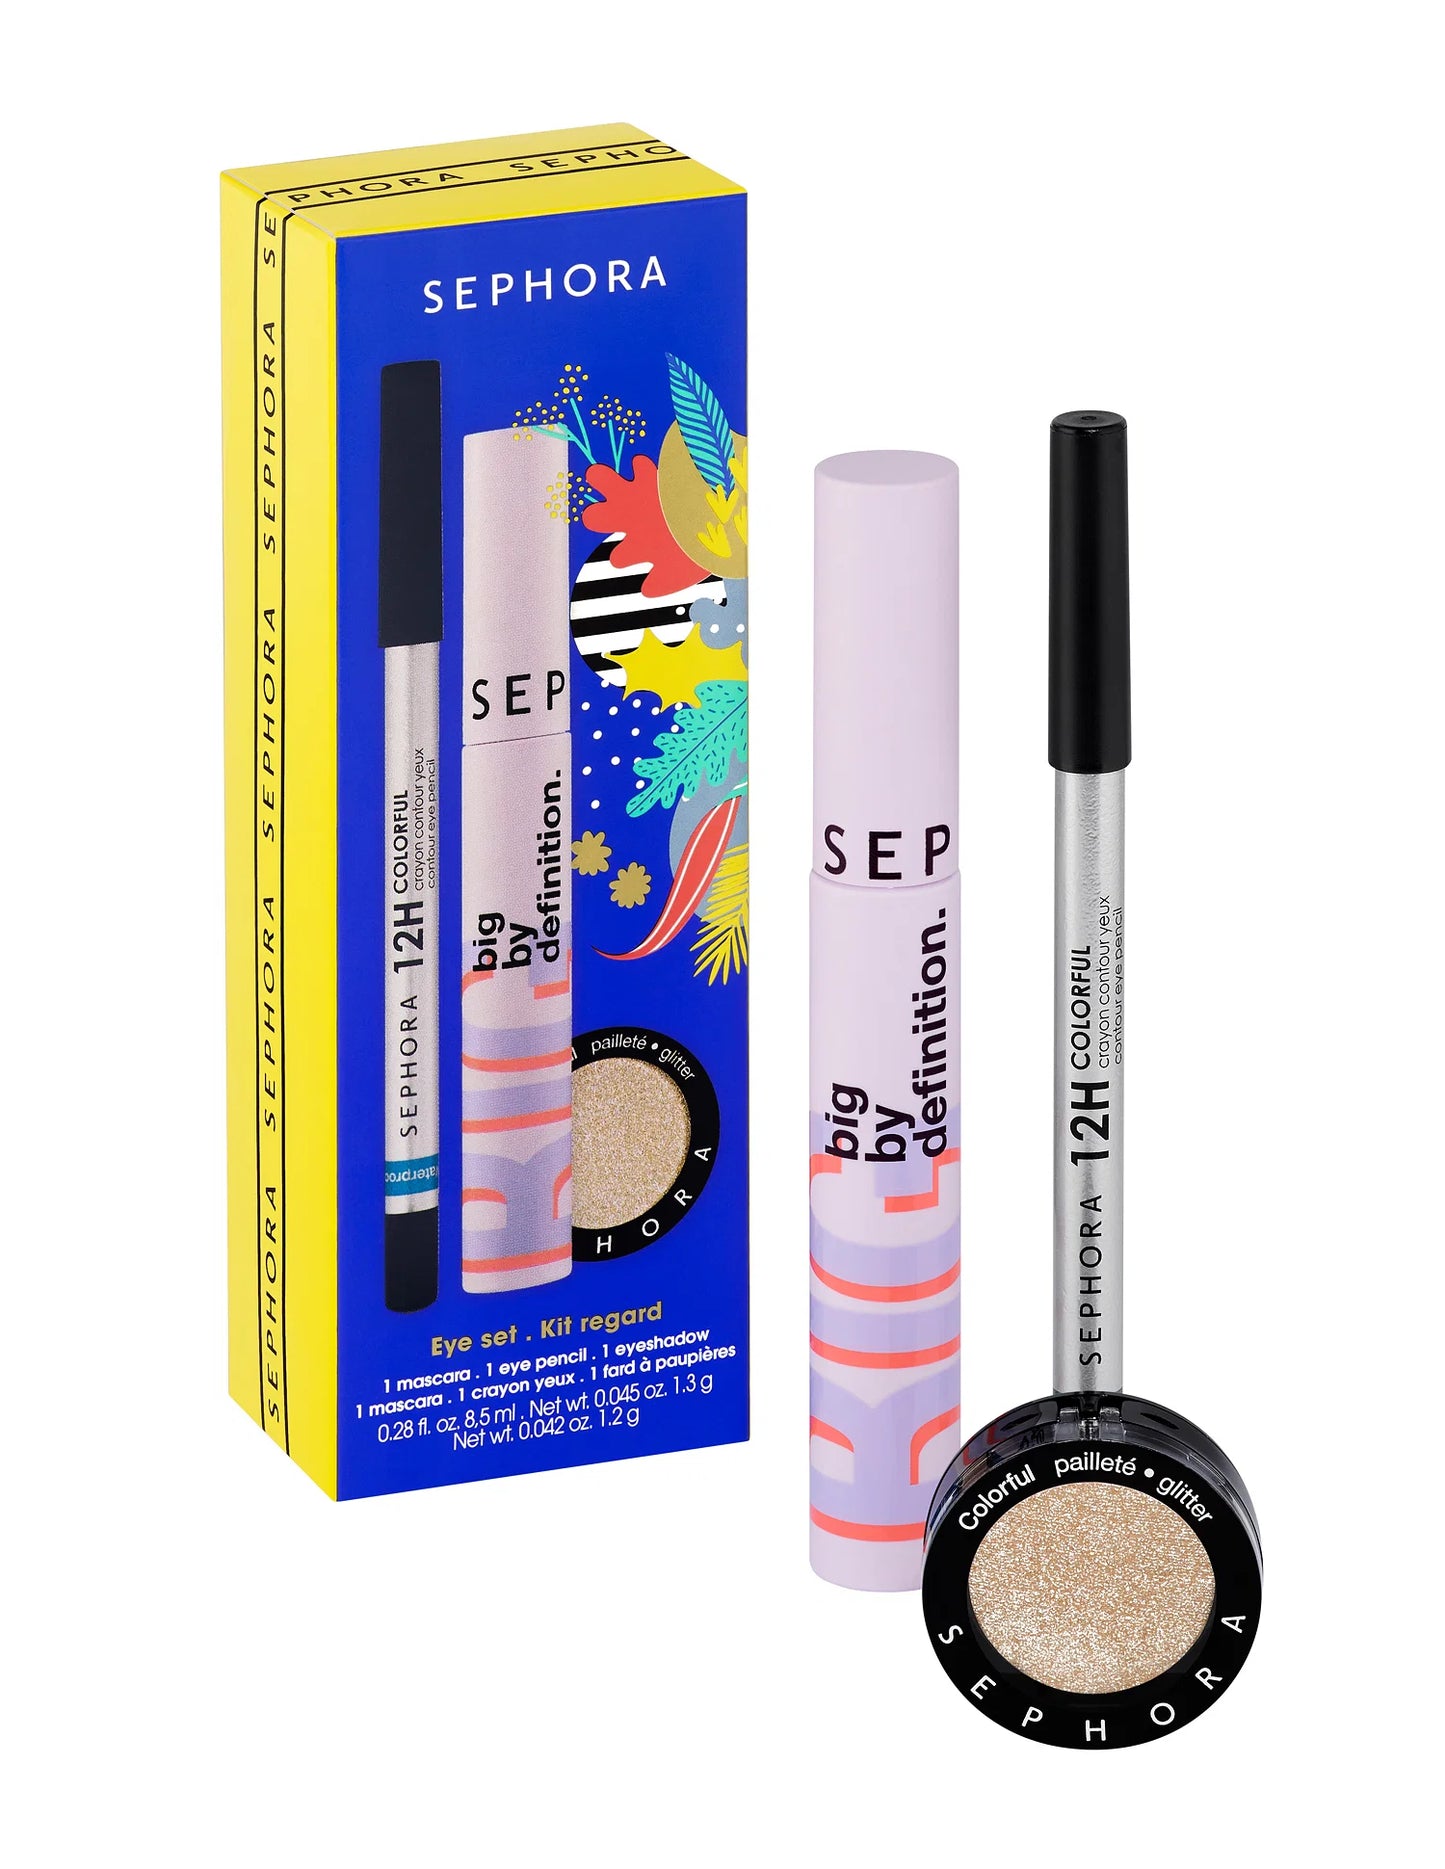 SEPHORA COLLECTION Wishing You Eye Makeup Set